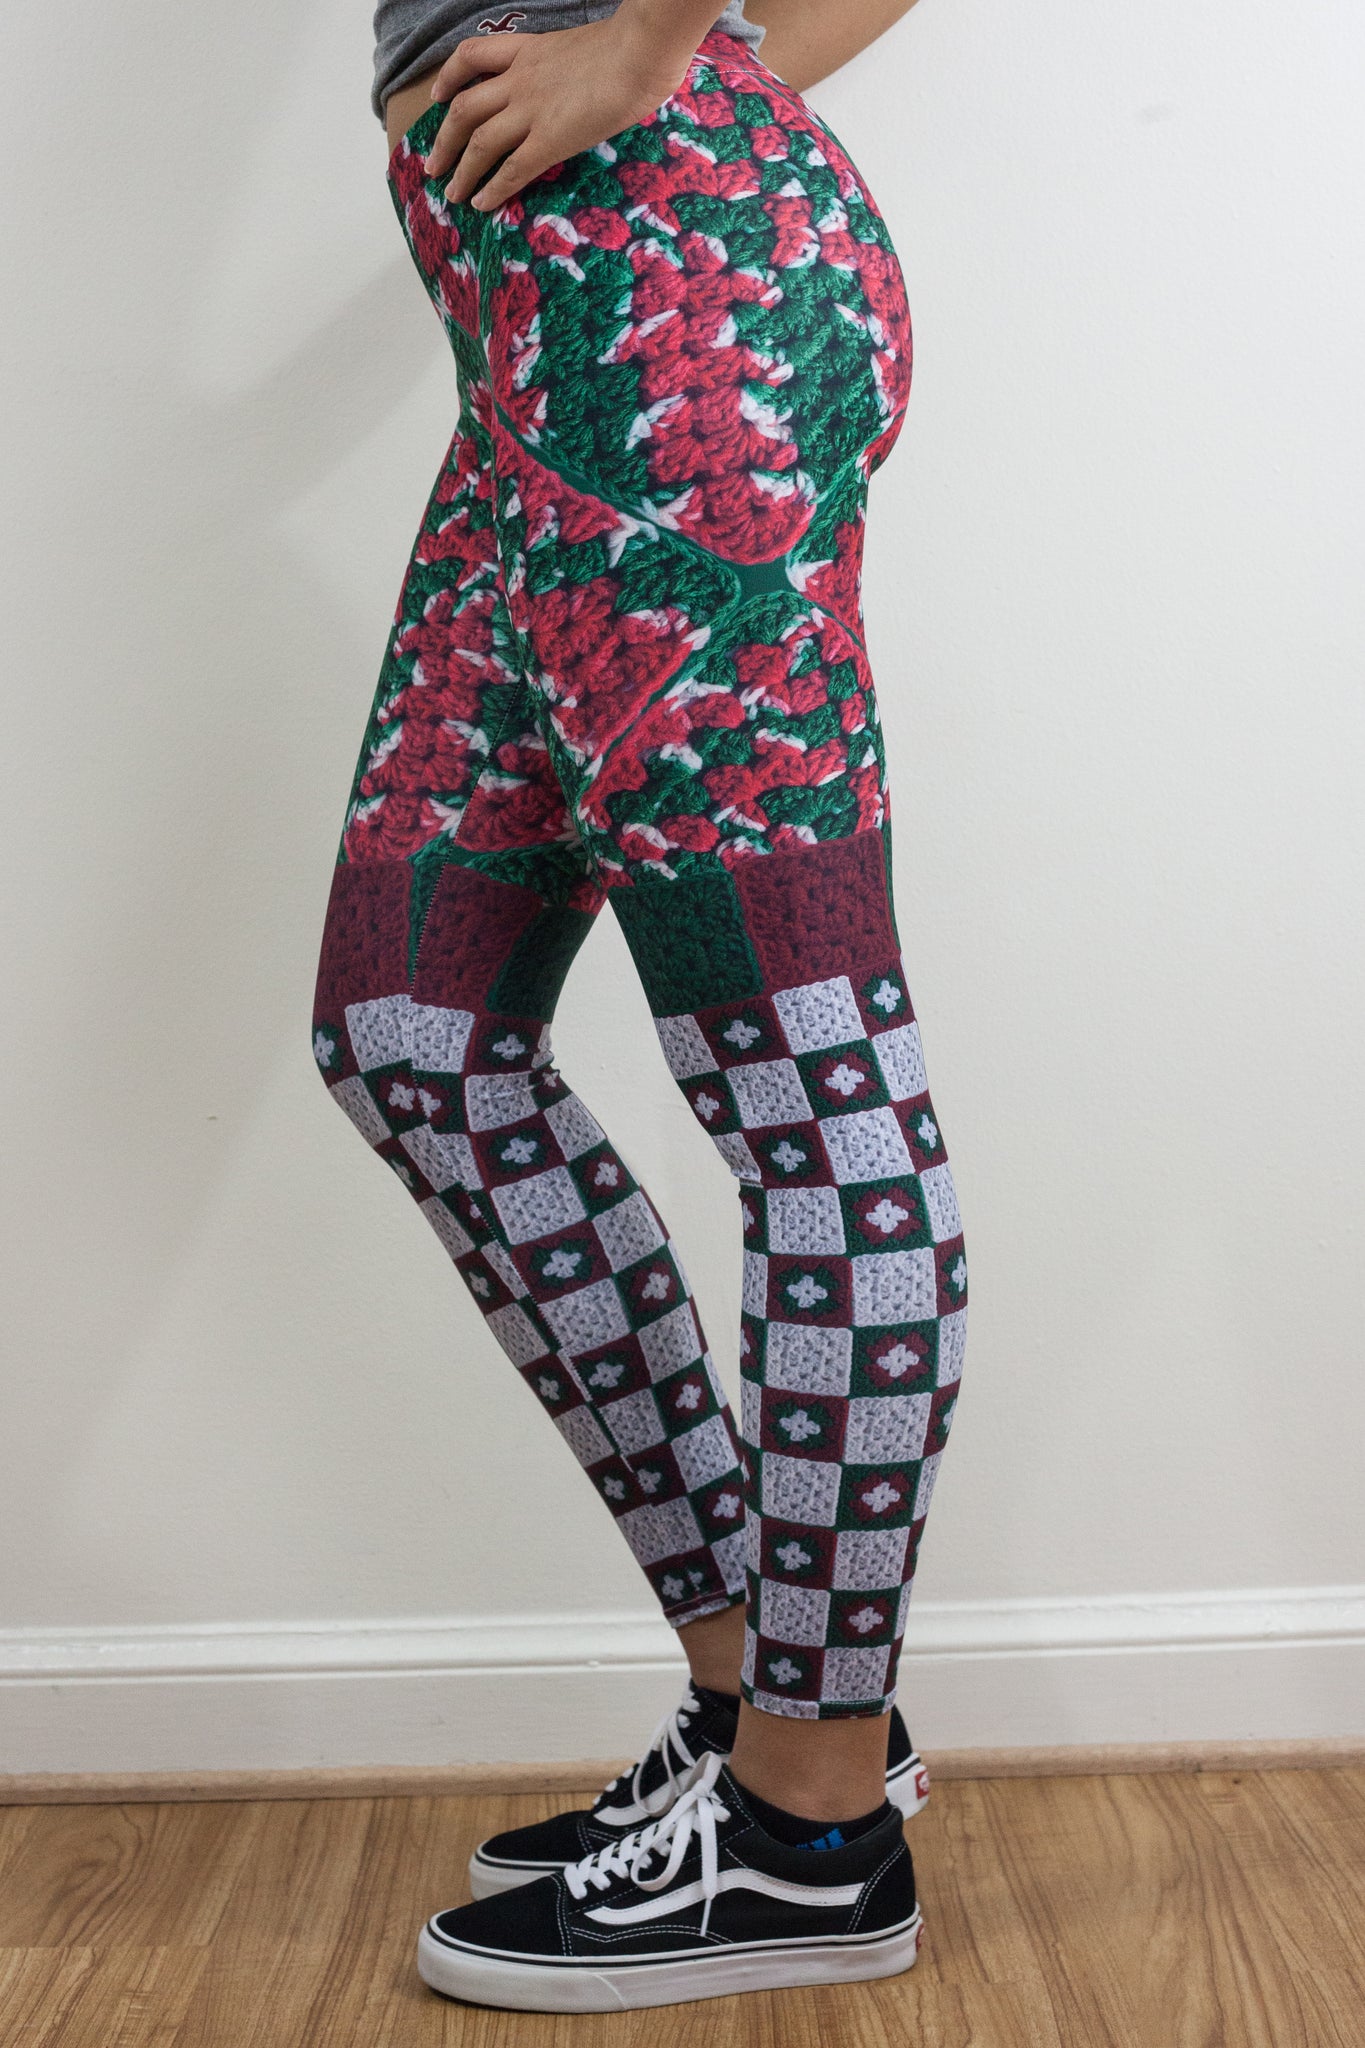 'Christmas Cheer' Crochet Print Granny Square Leggings